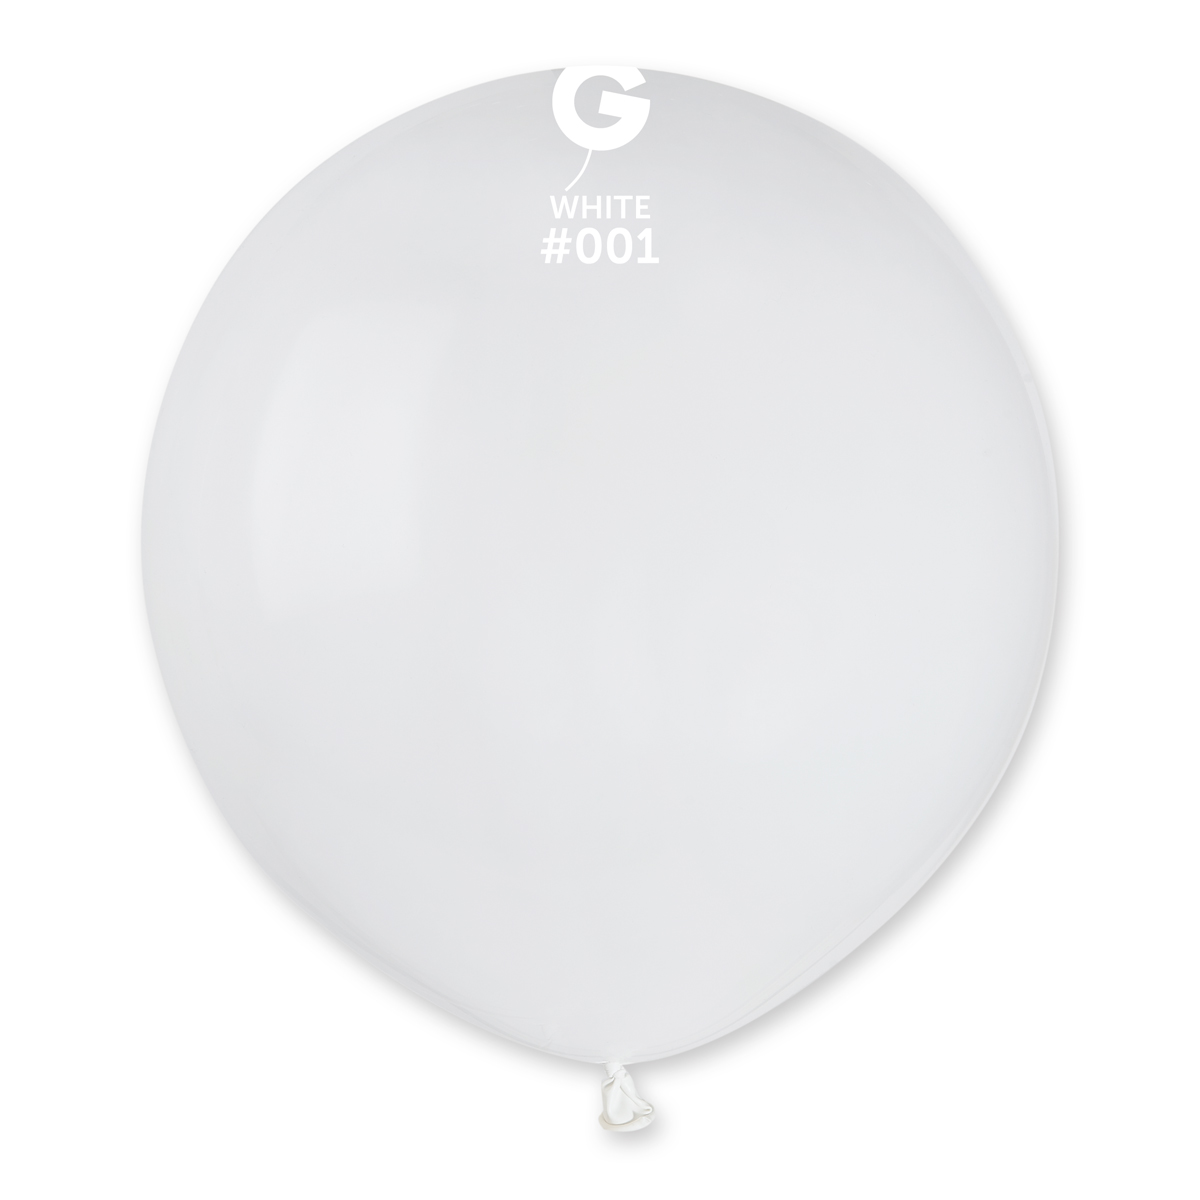 Gemar Balón pastelový bílý 48 cm